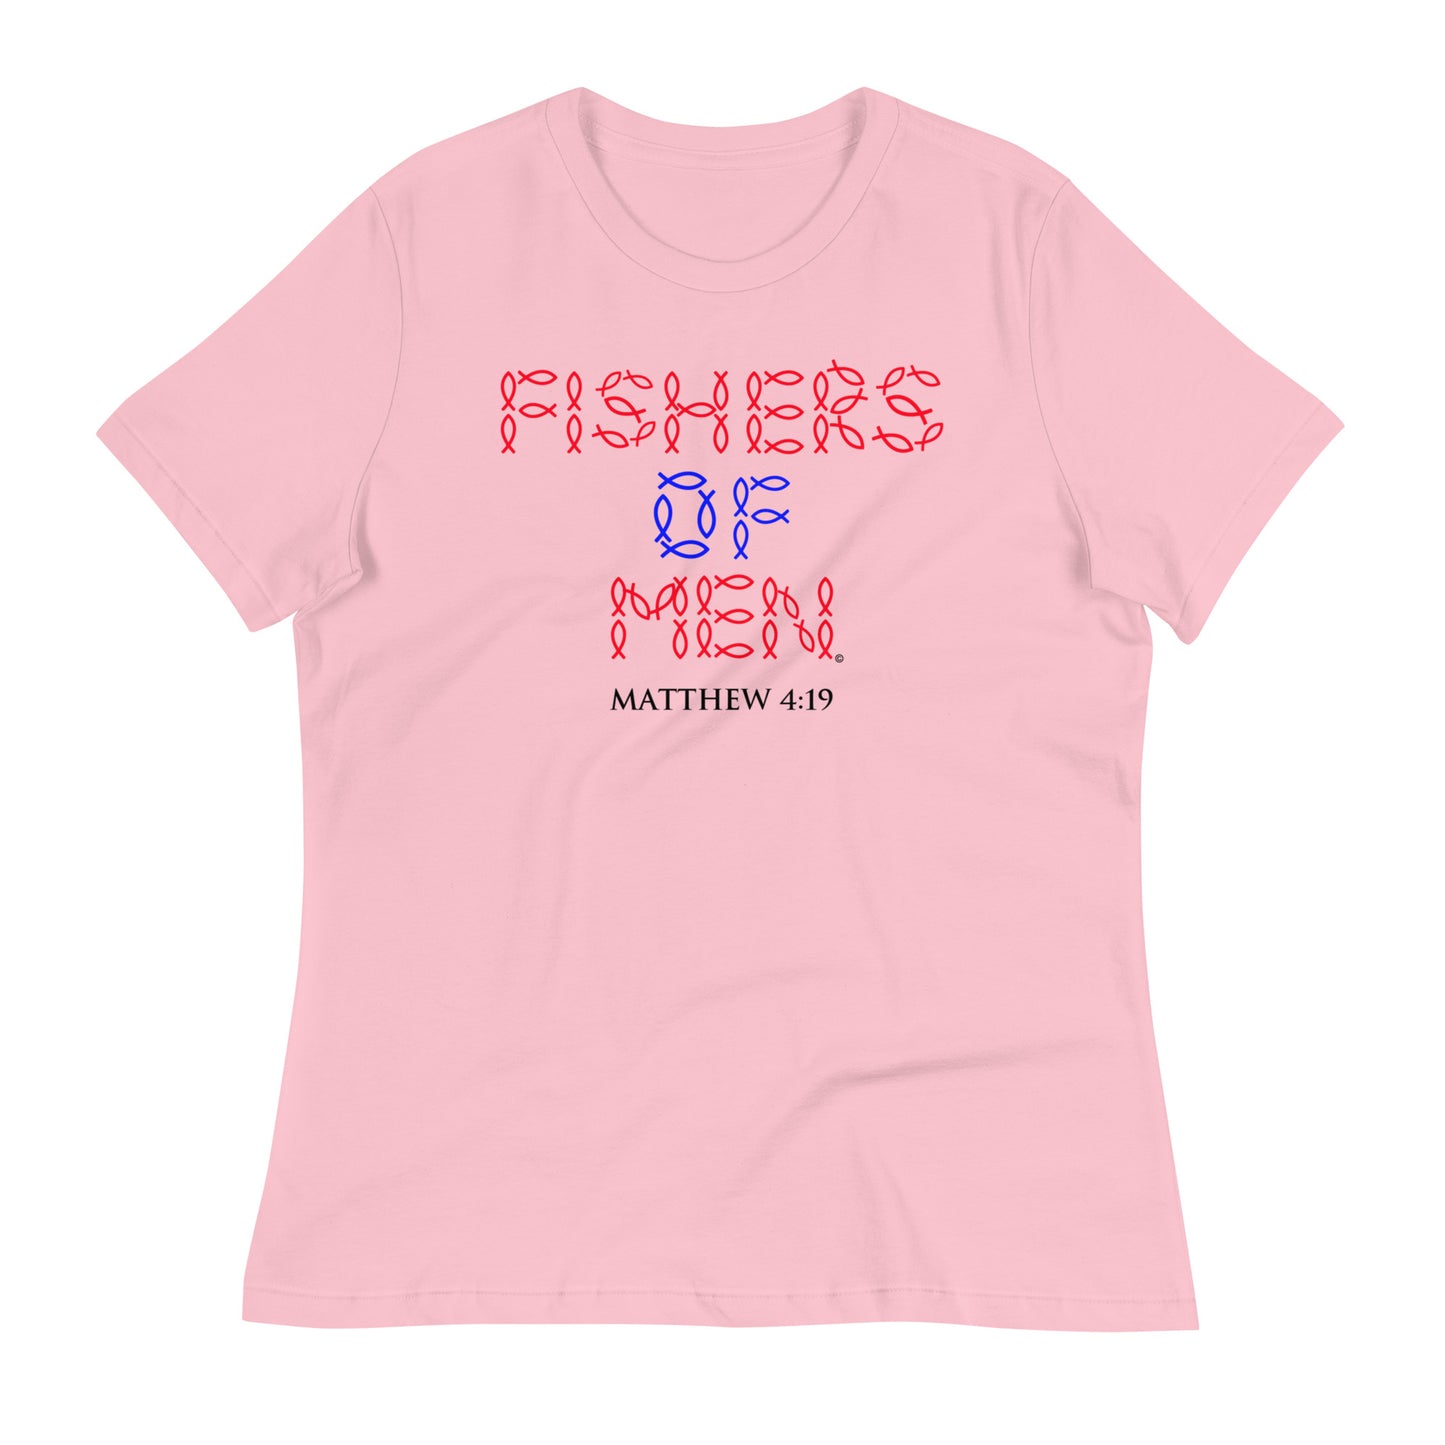 Fishers of Men Women's Relaxed T-Shirt